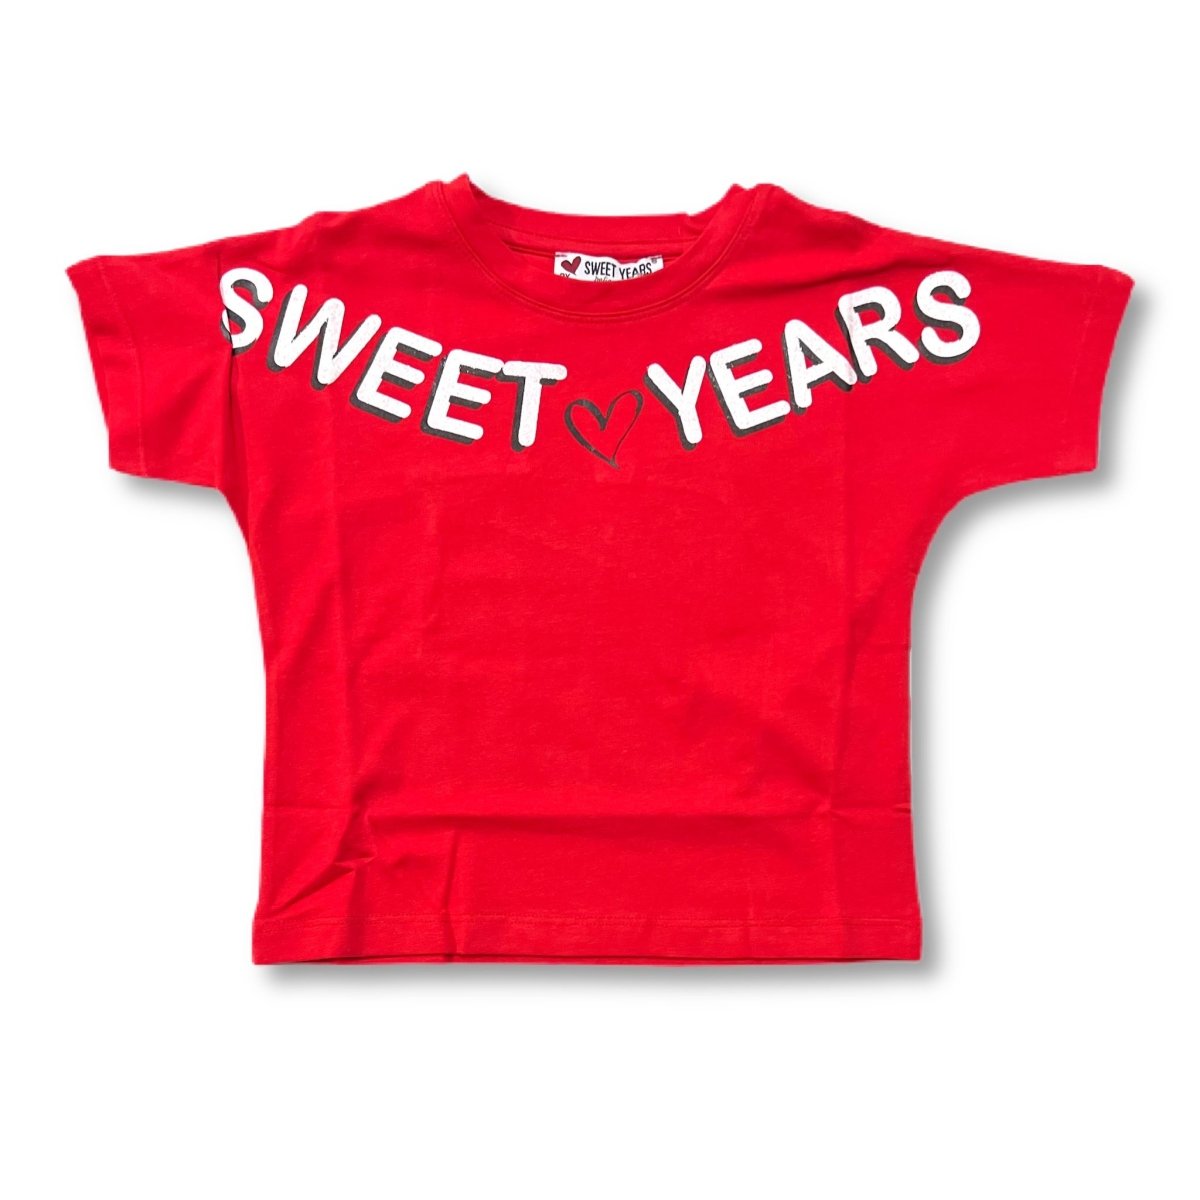 T-shirt Sweet Years anni Bimba - Mstore016 - T-shirt Sweet Years - Sweet Years